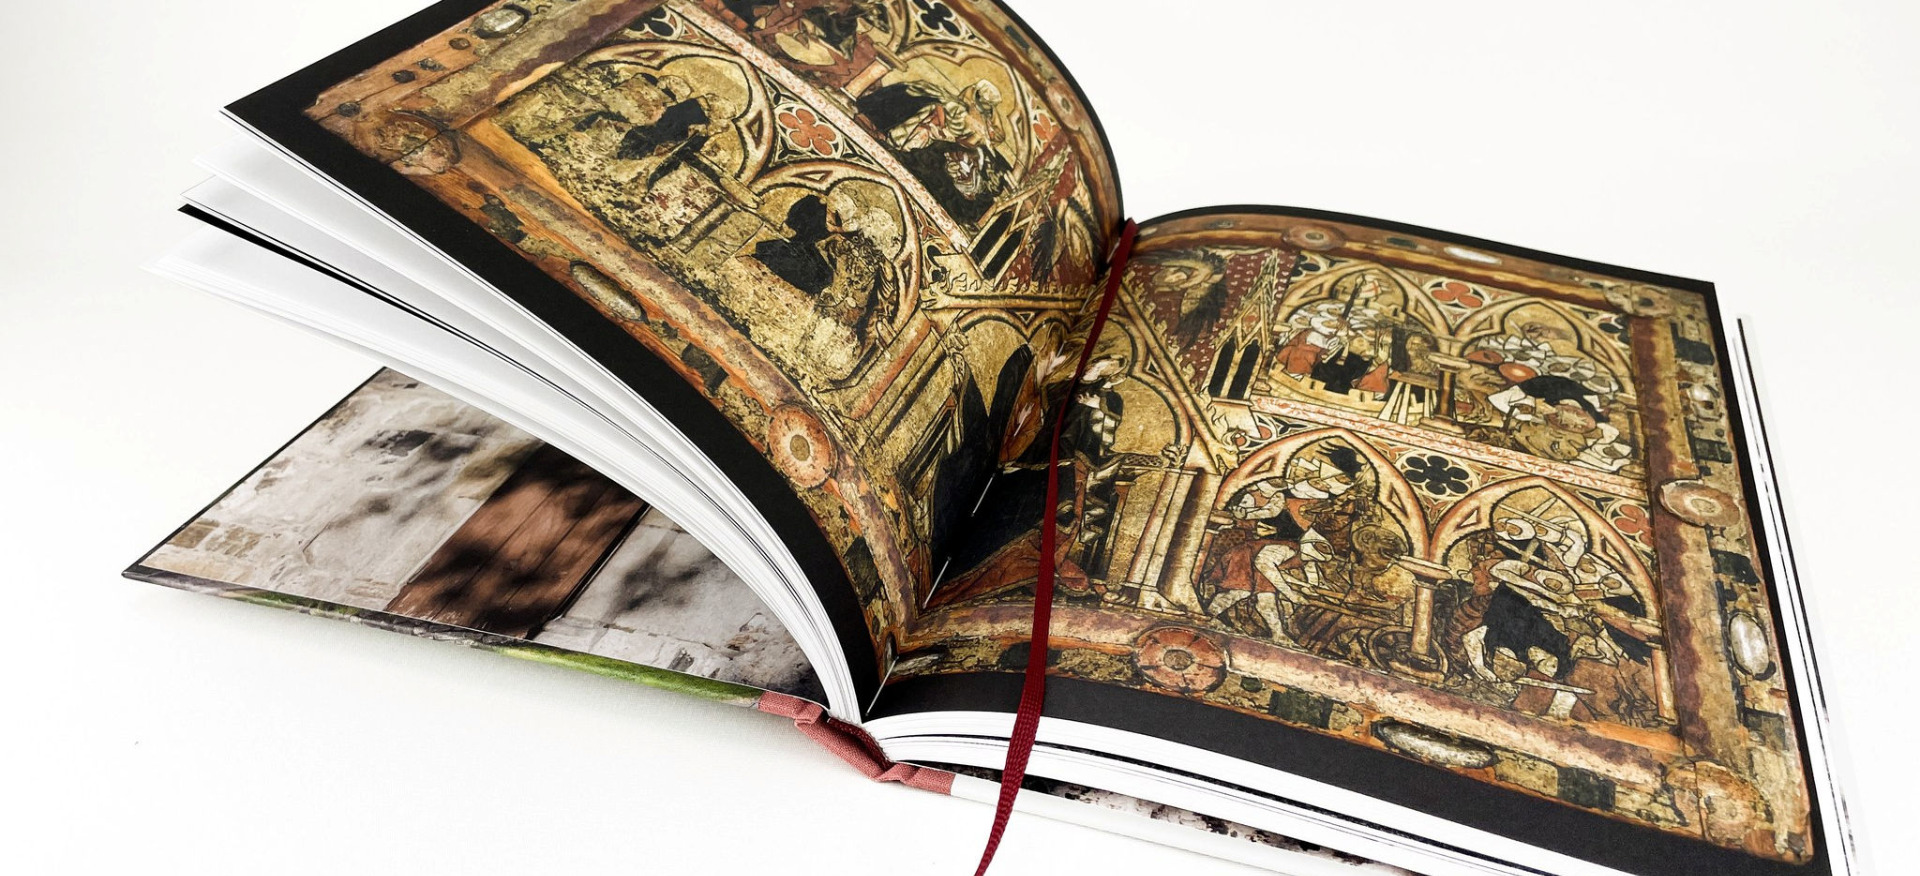 Boka om St. Jetmund Kyrkje er ei praktbok